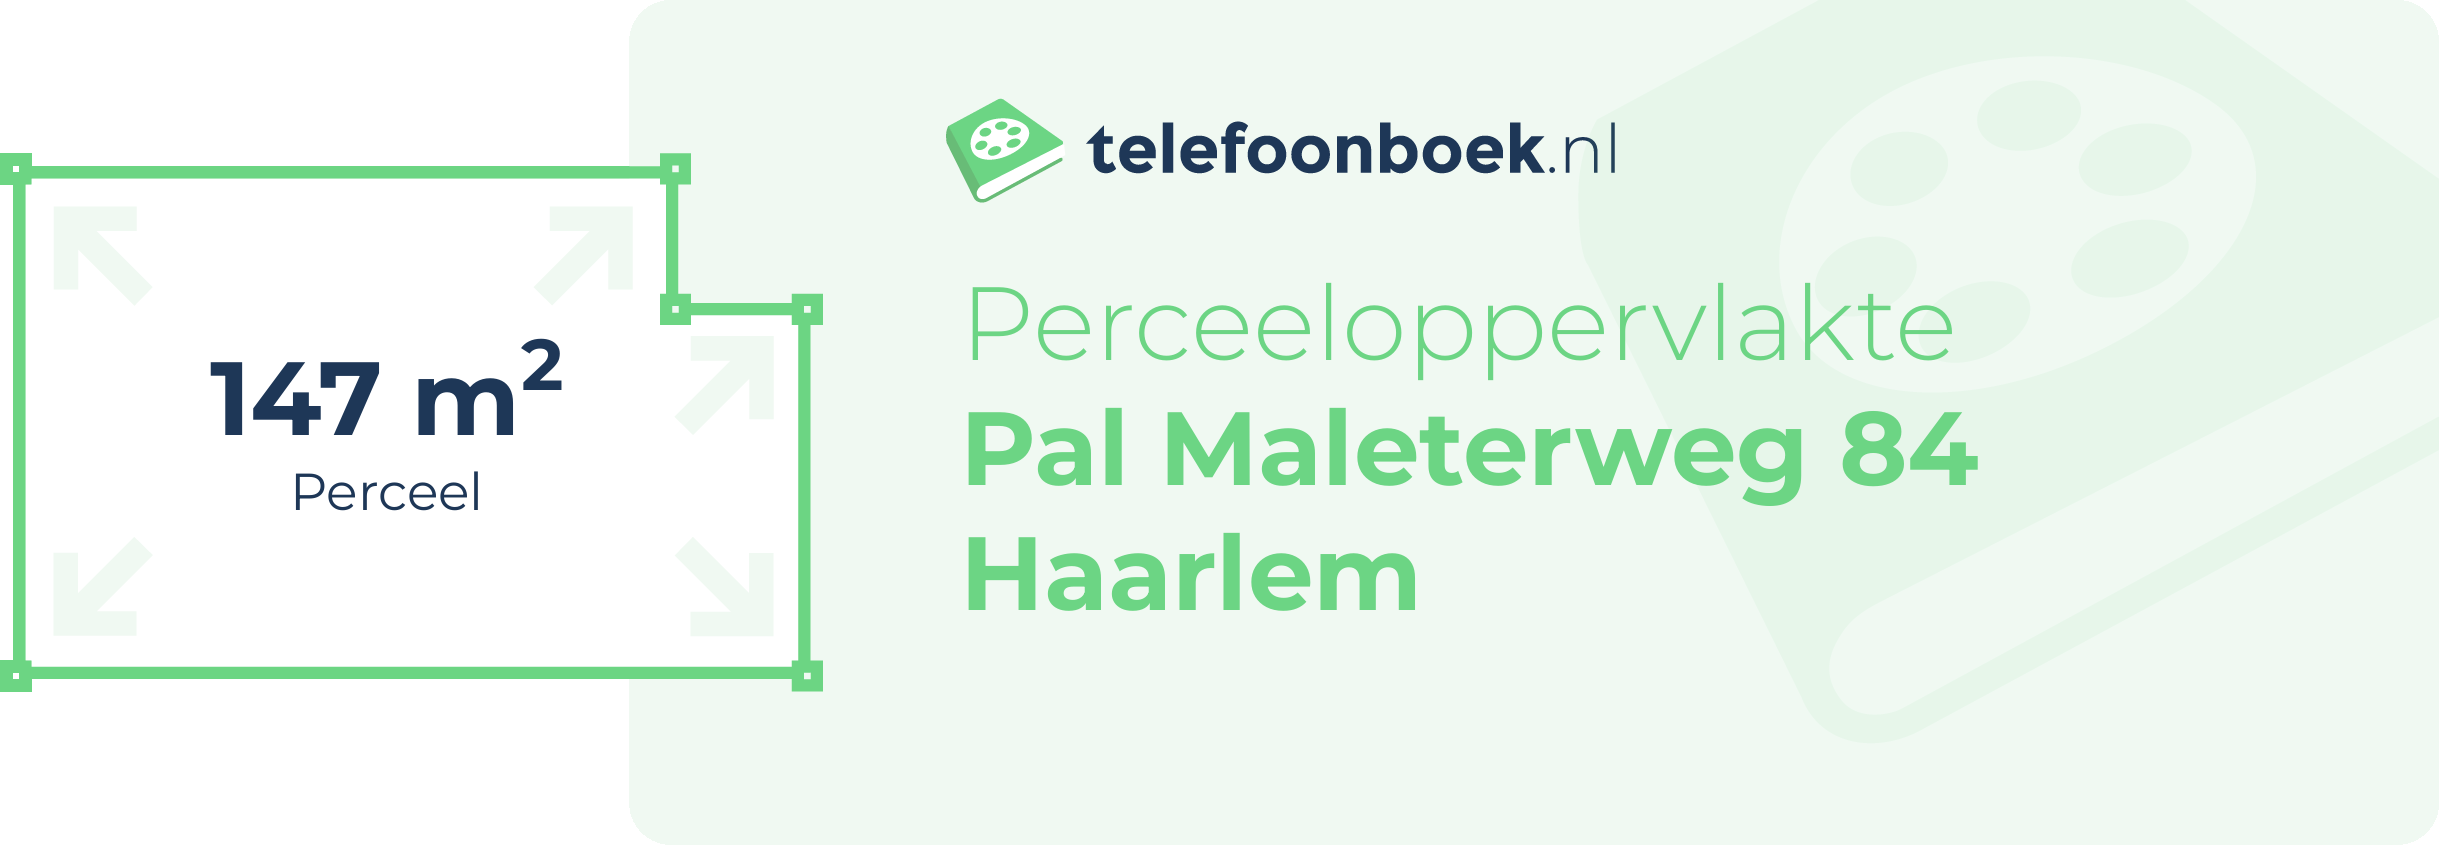 Perceeloppervlakte Pal Maleterweg 84 Haarlem